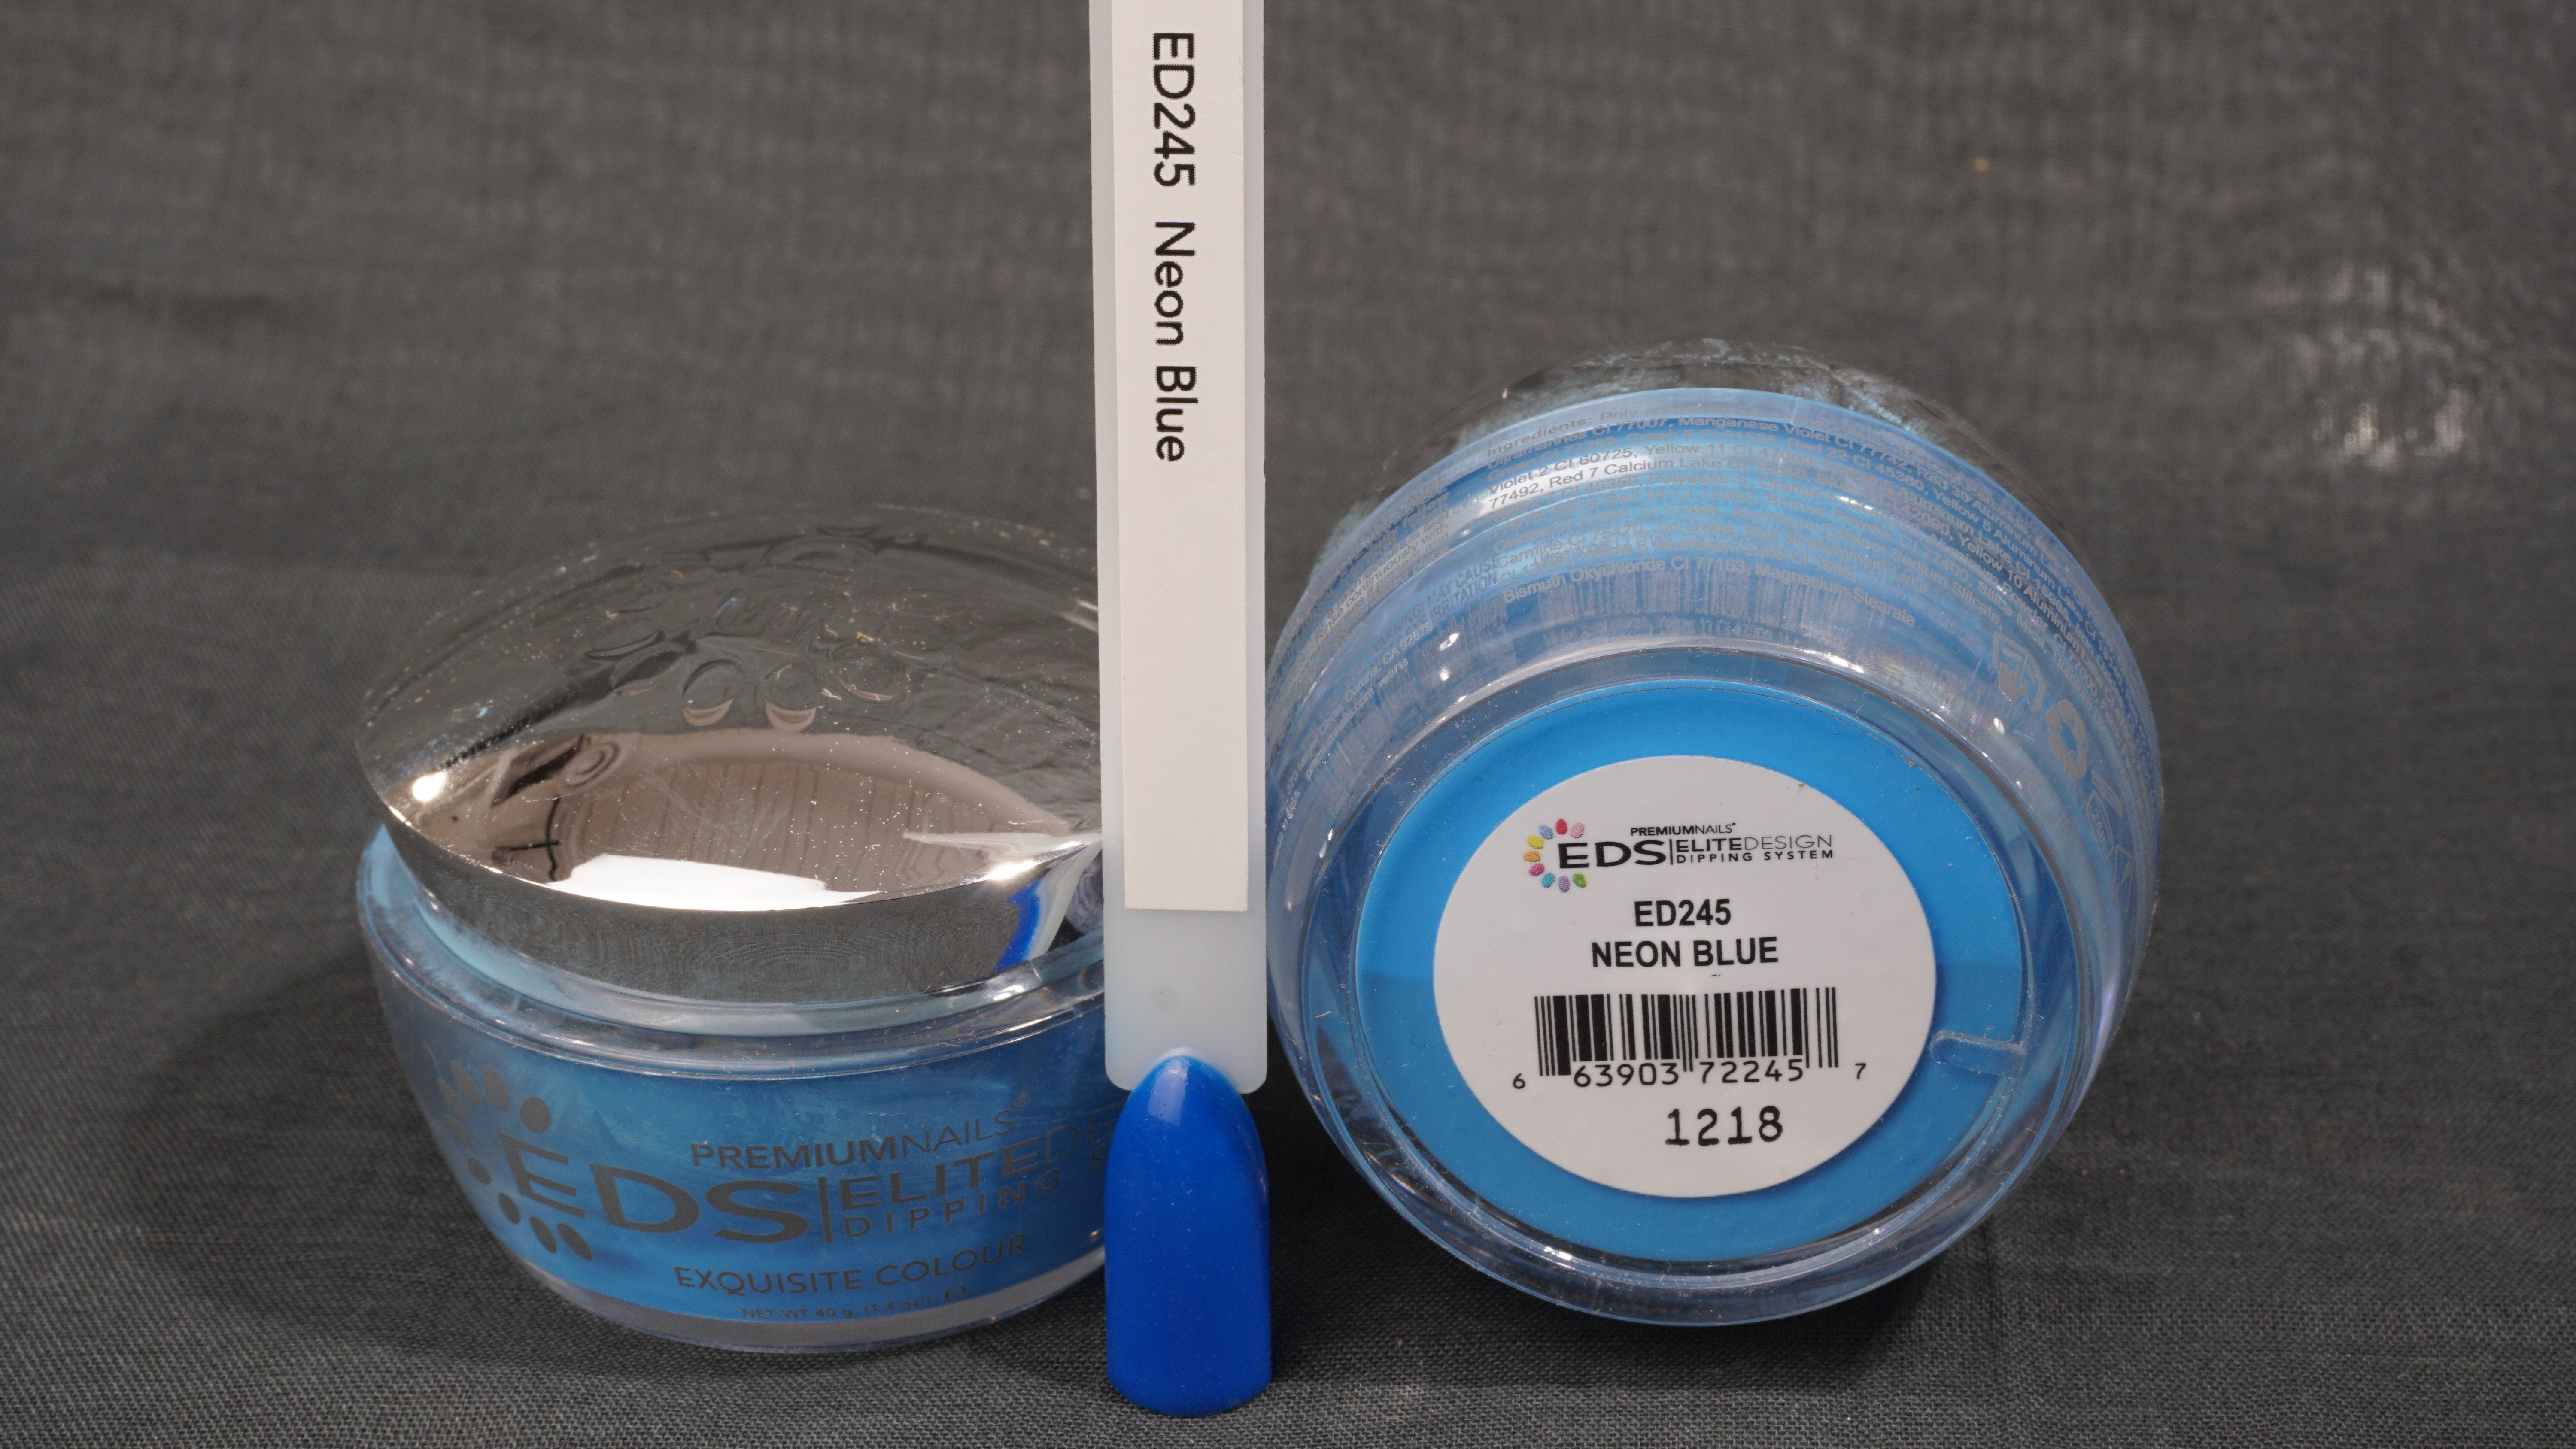 ED245 Neon Blue 40 g - ELITEDESIGN PREMIUM NAILS Dip Powder